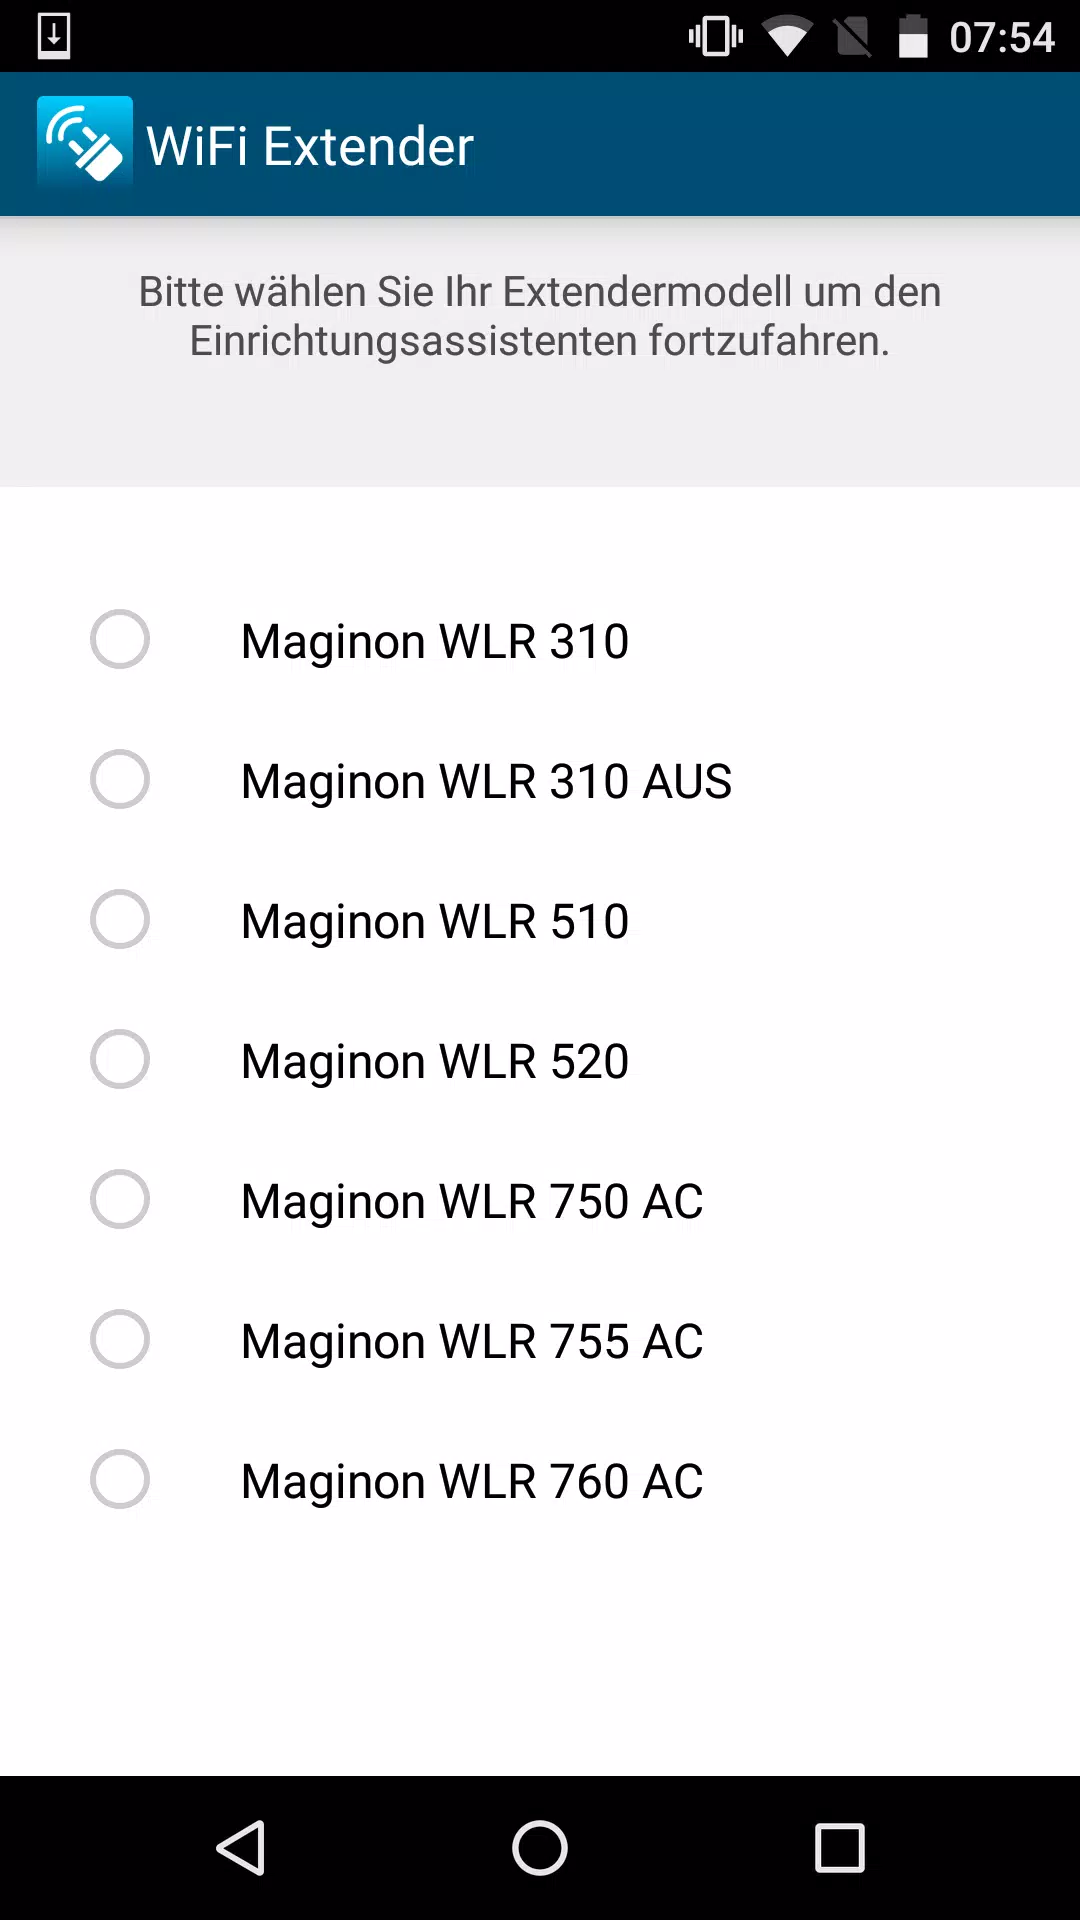 kande Kontrakt Burger Maginon WiFi Extender APK for Android Download